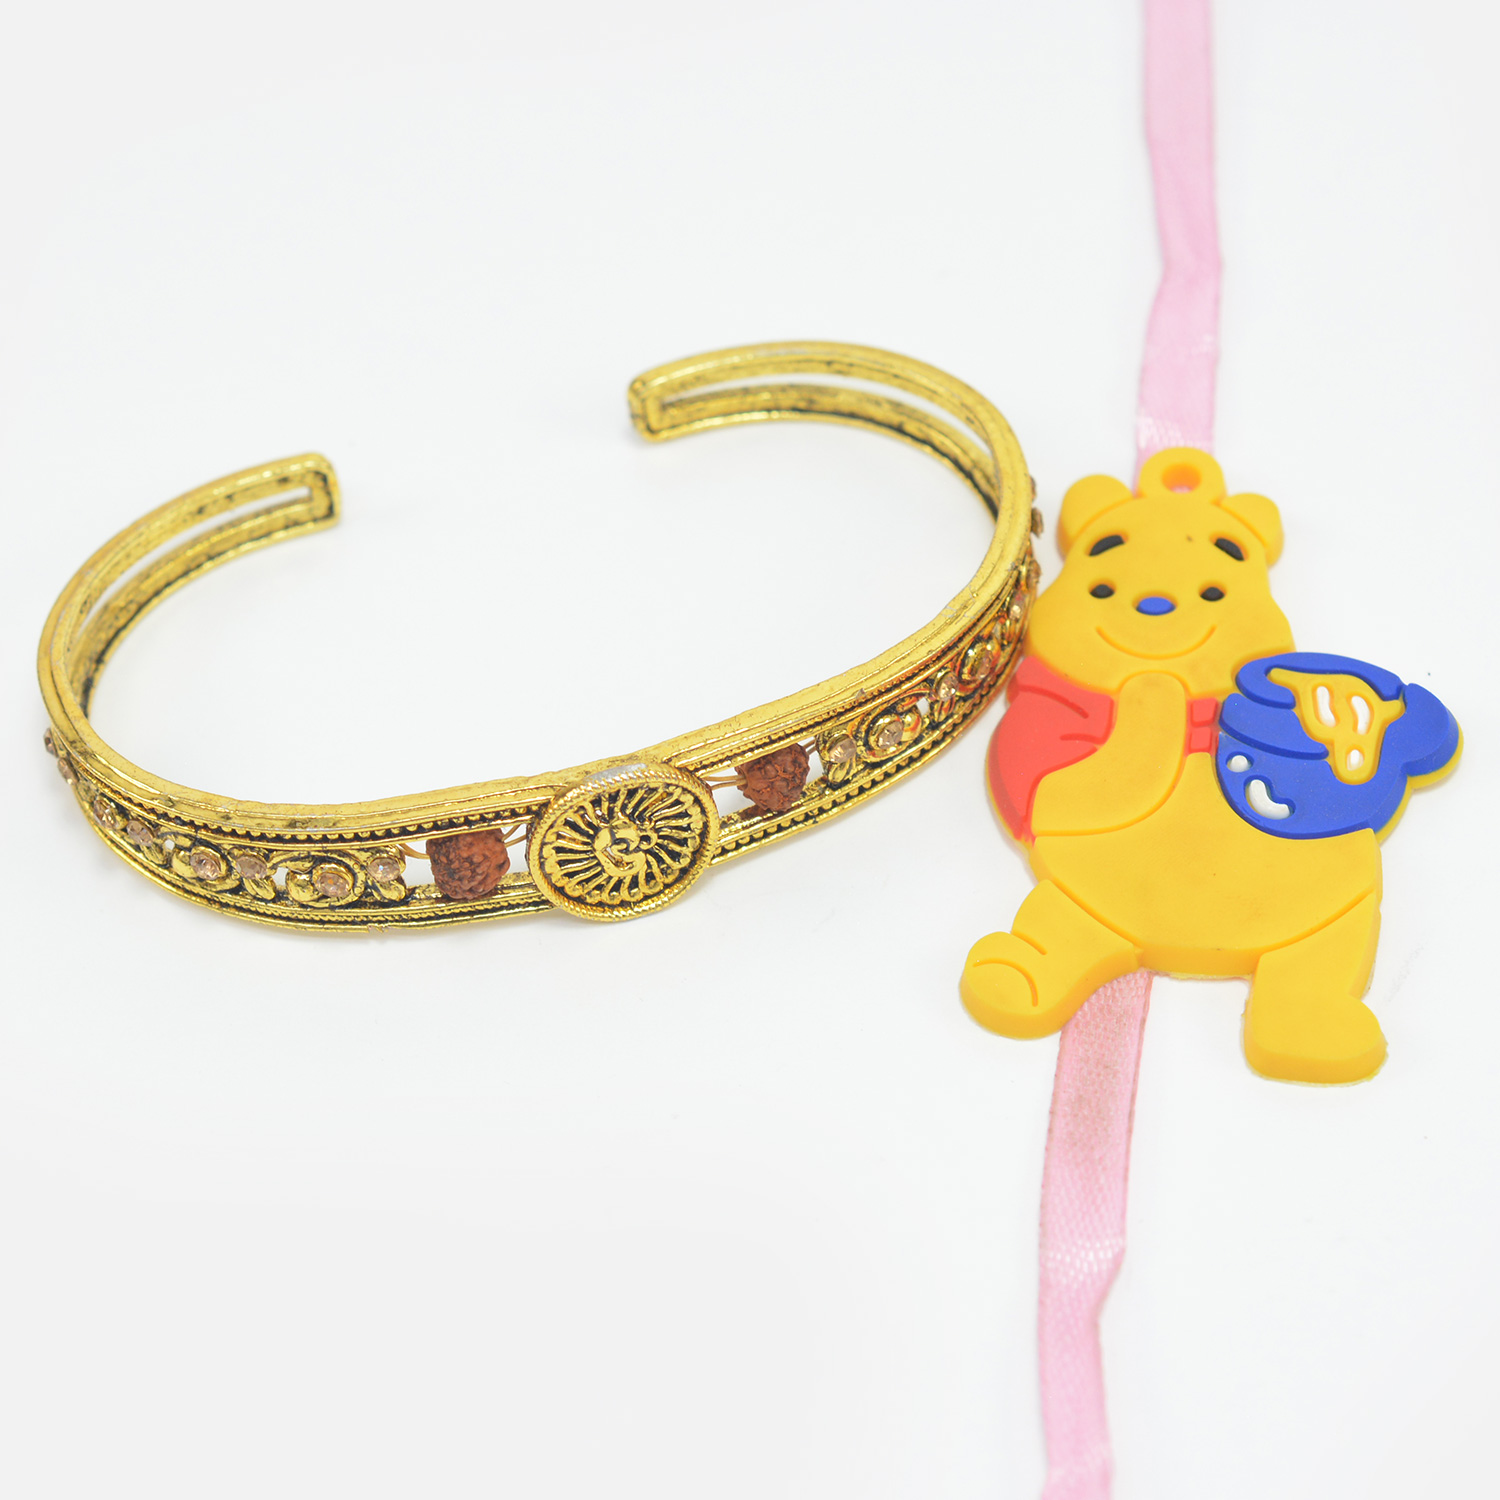 Golden Handcrafted Rakhi Bracelet for Brother with Kid Rakhi of Pooh Cartoon